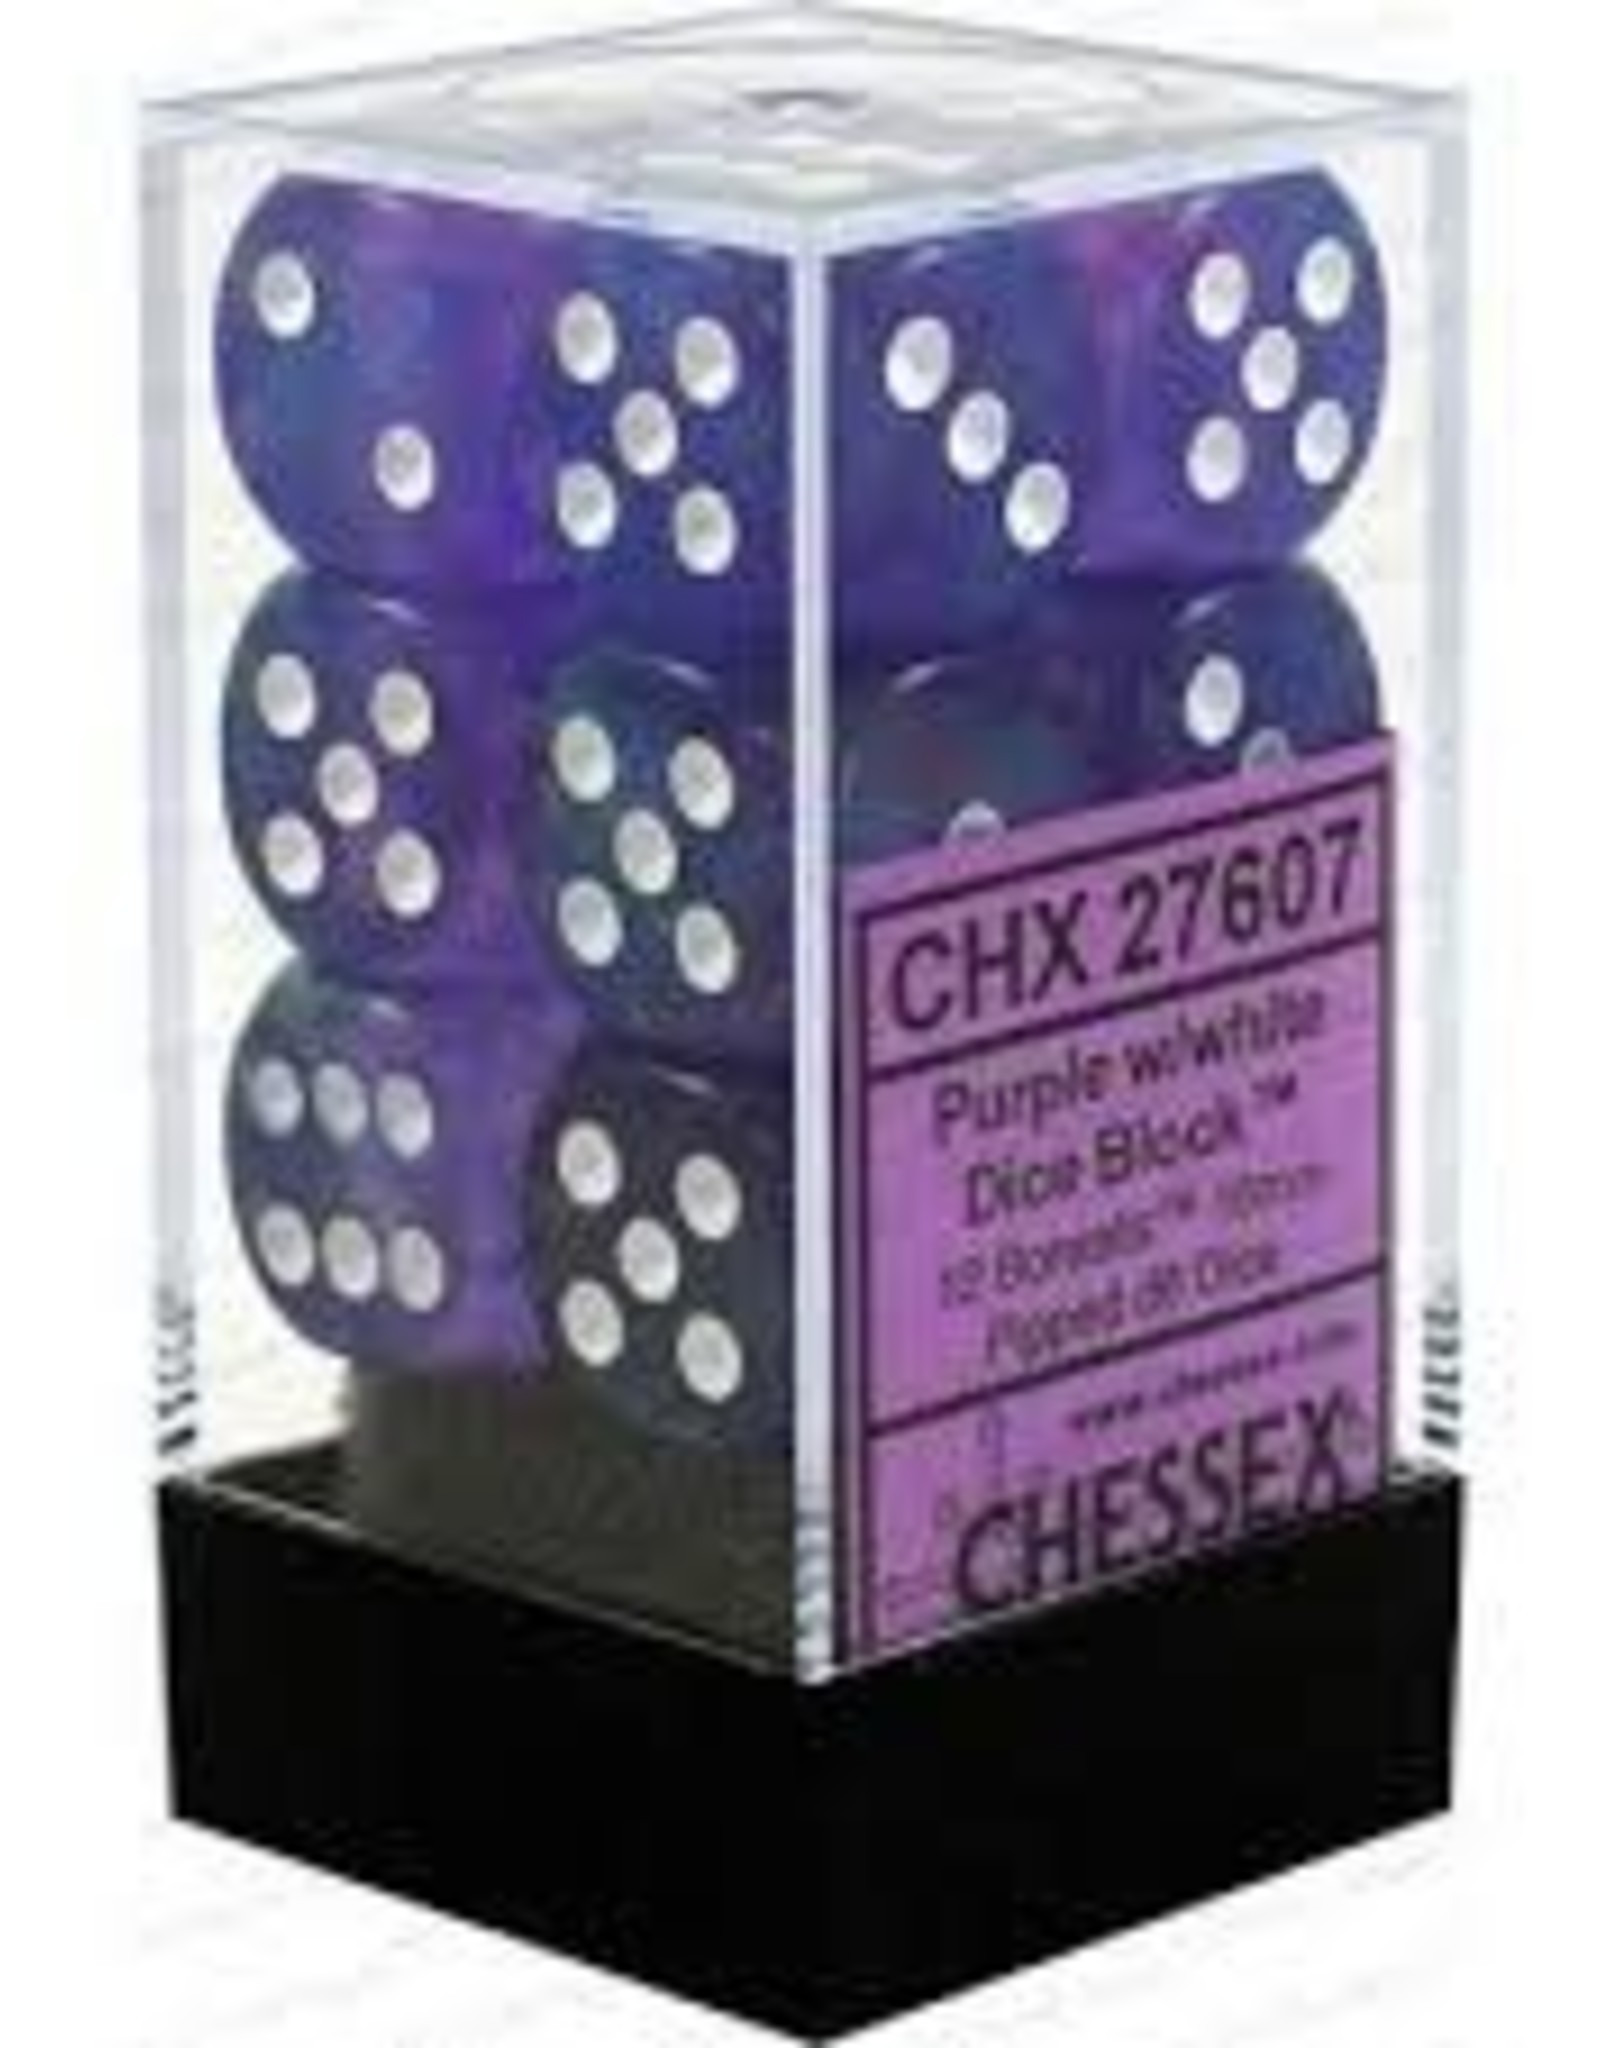 Chessex Dice - 12D6 Purple & White